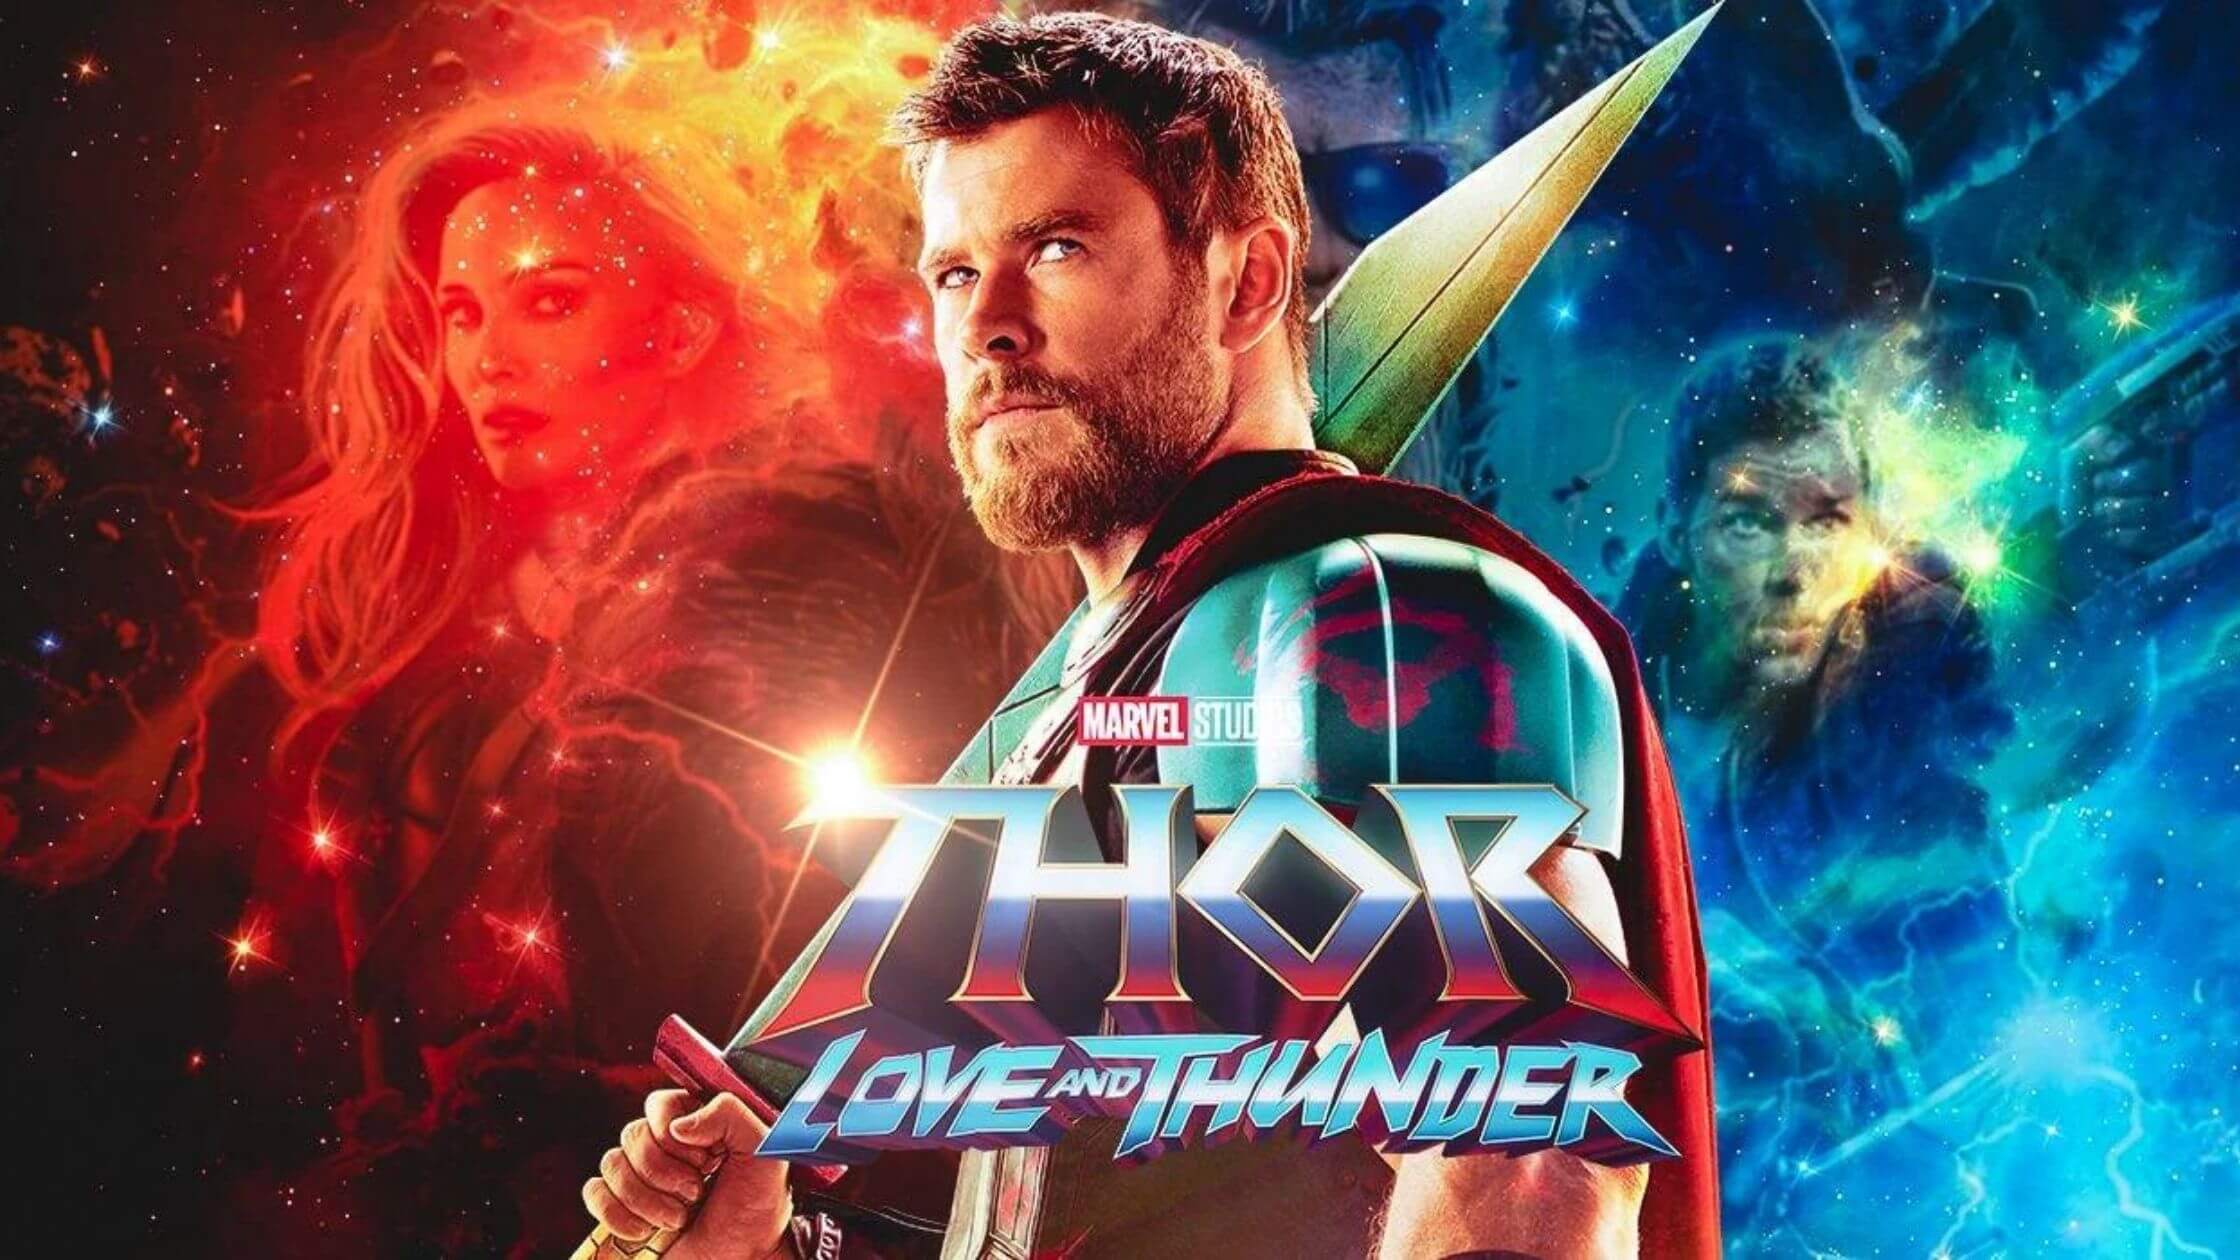 Thor Love And Thunder Trailer